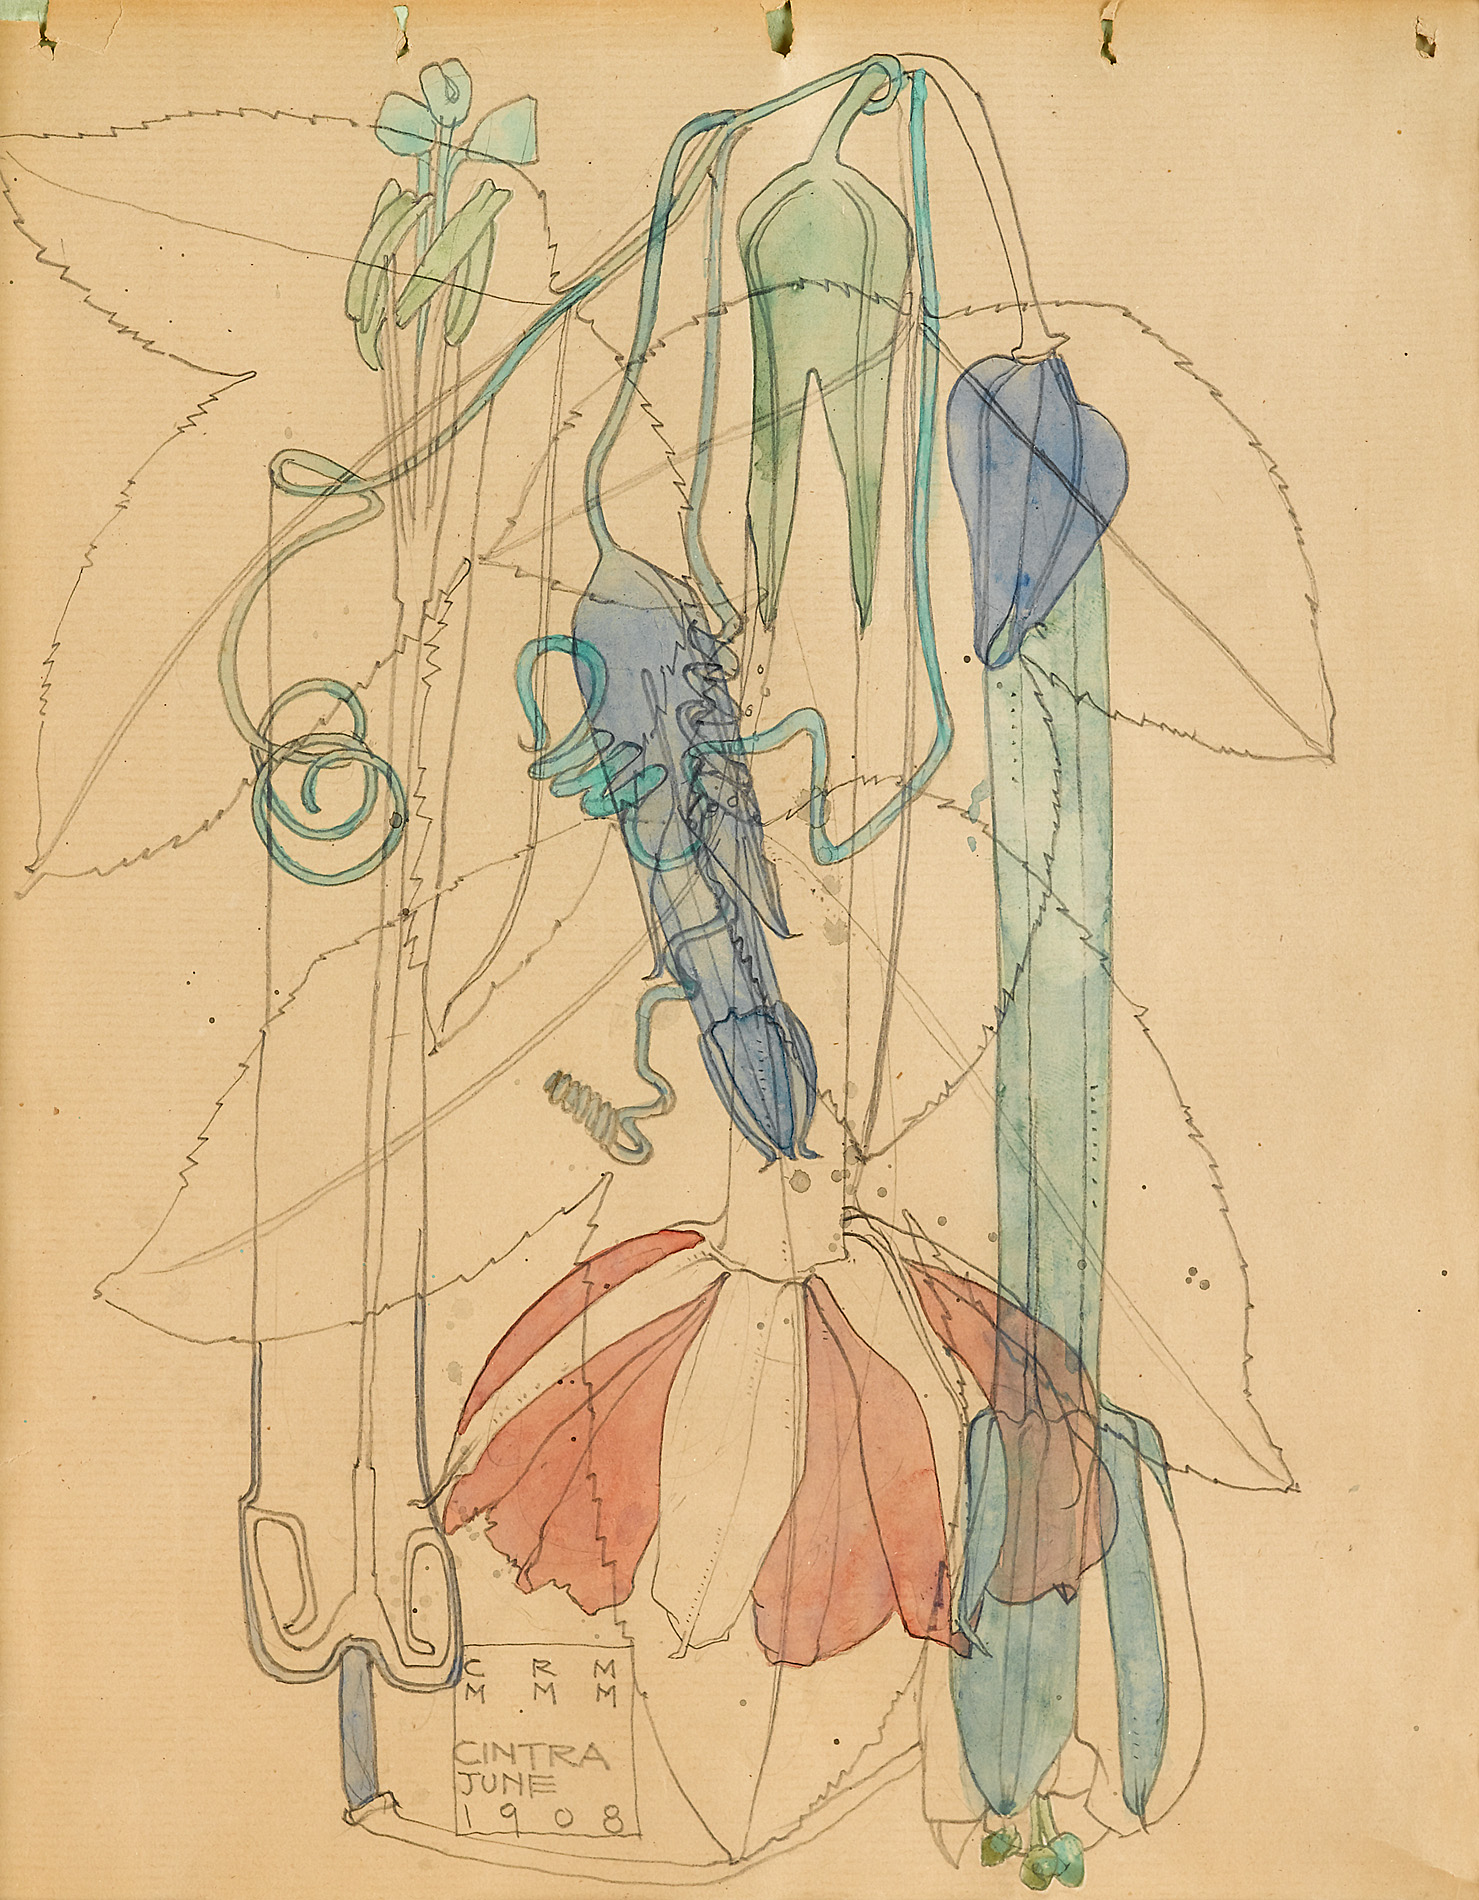 Charles Rennie Mackintosh. Tacsonia. 1908. Source: The Metropolitan Museum of Art